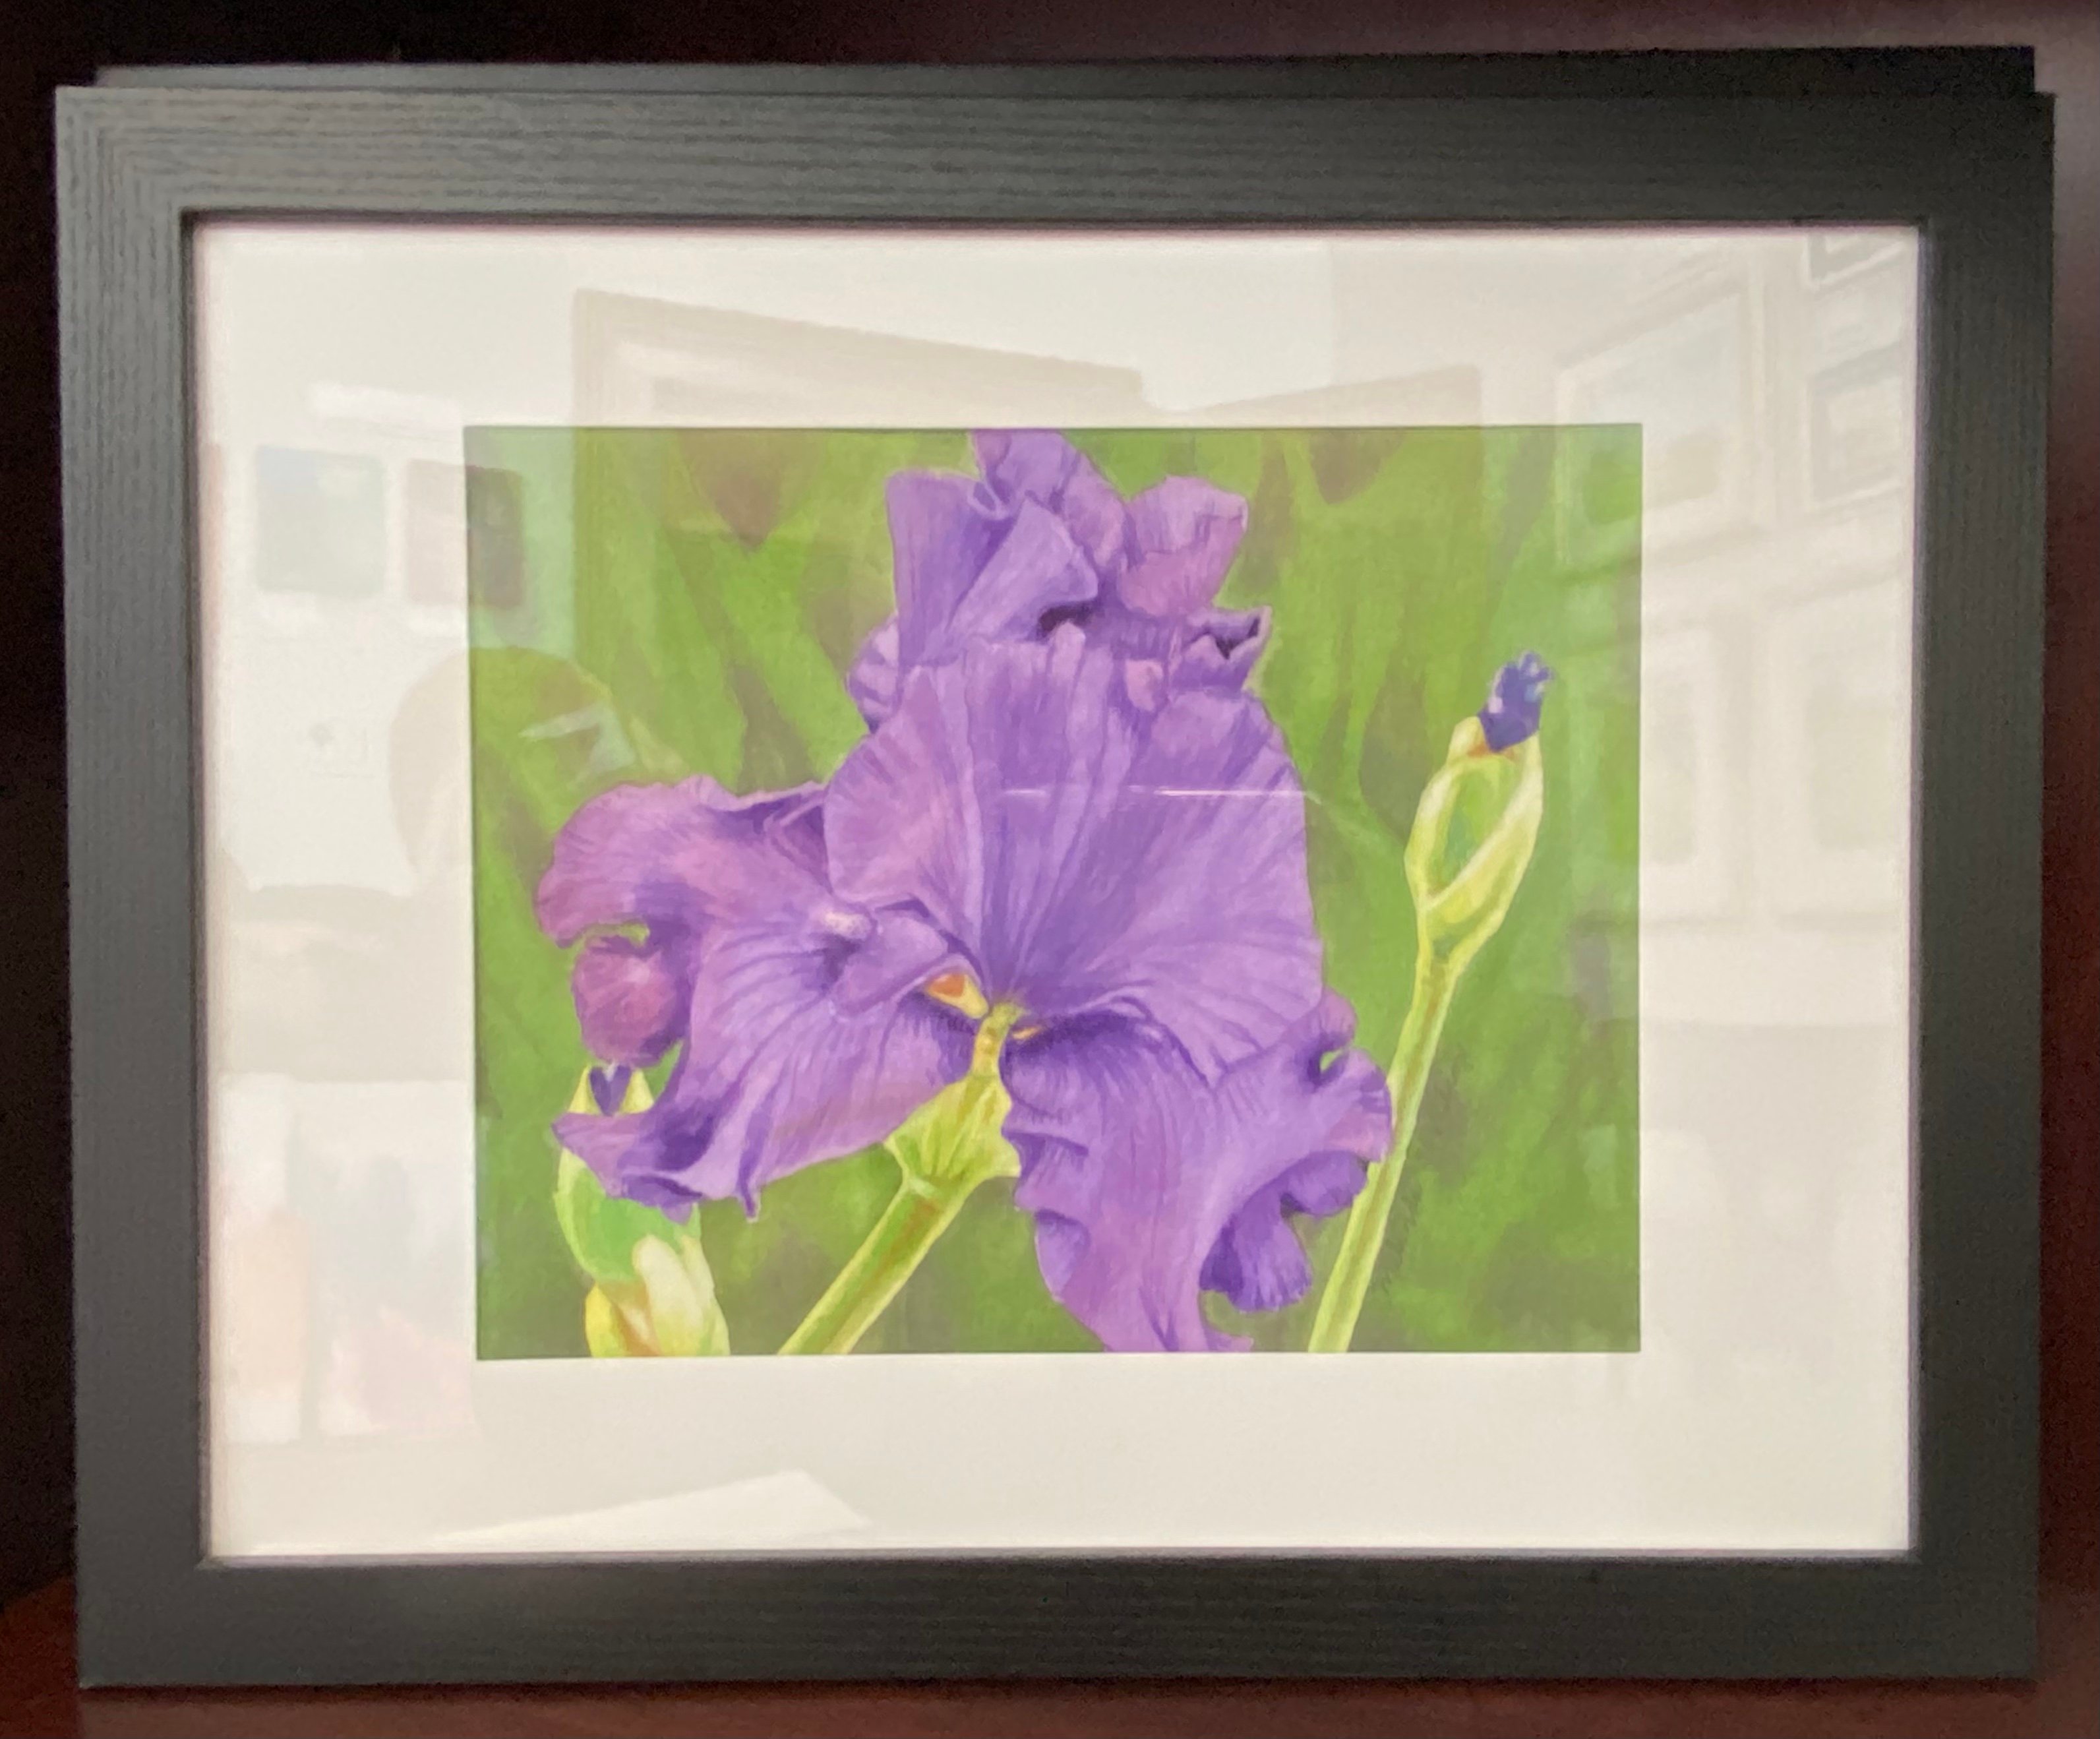 Purple Iris
Watercolor
8"x10"
$275.